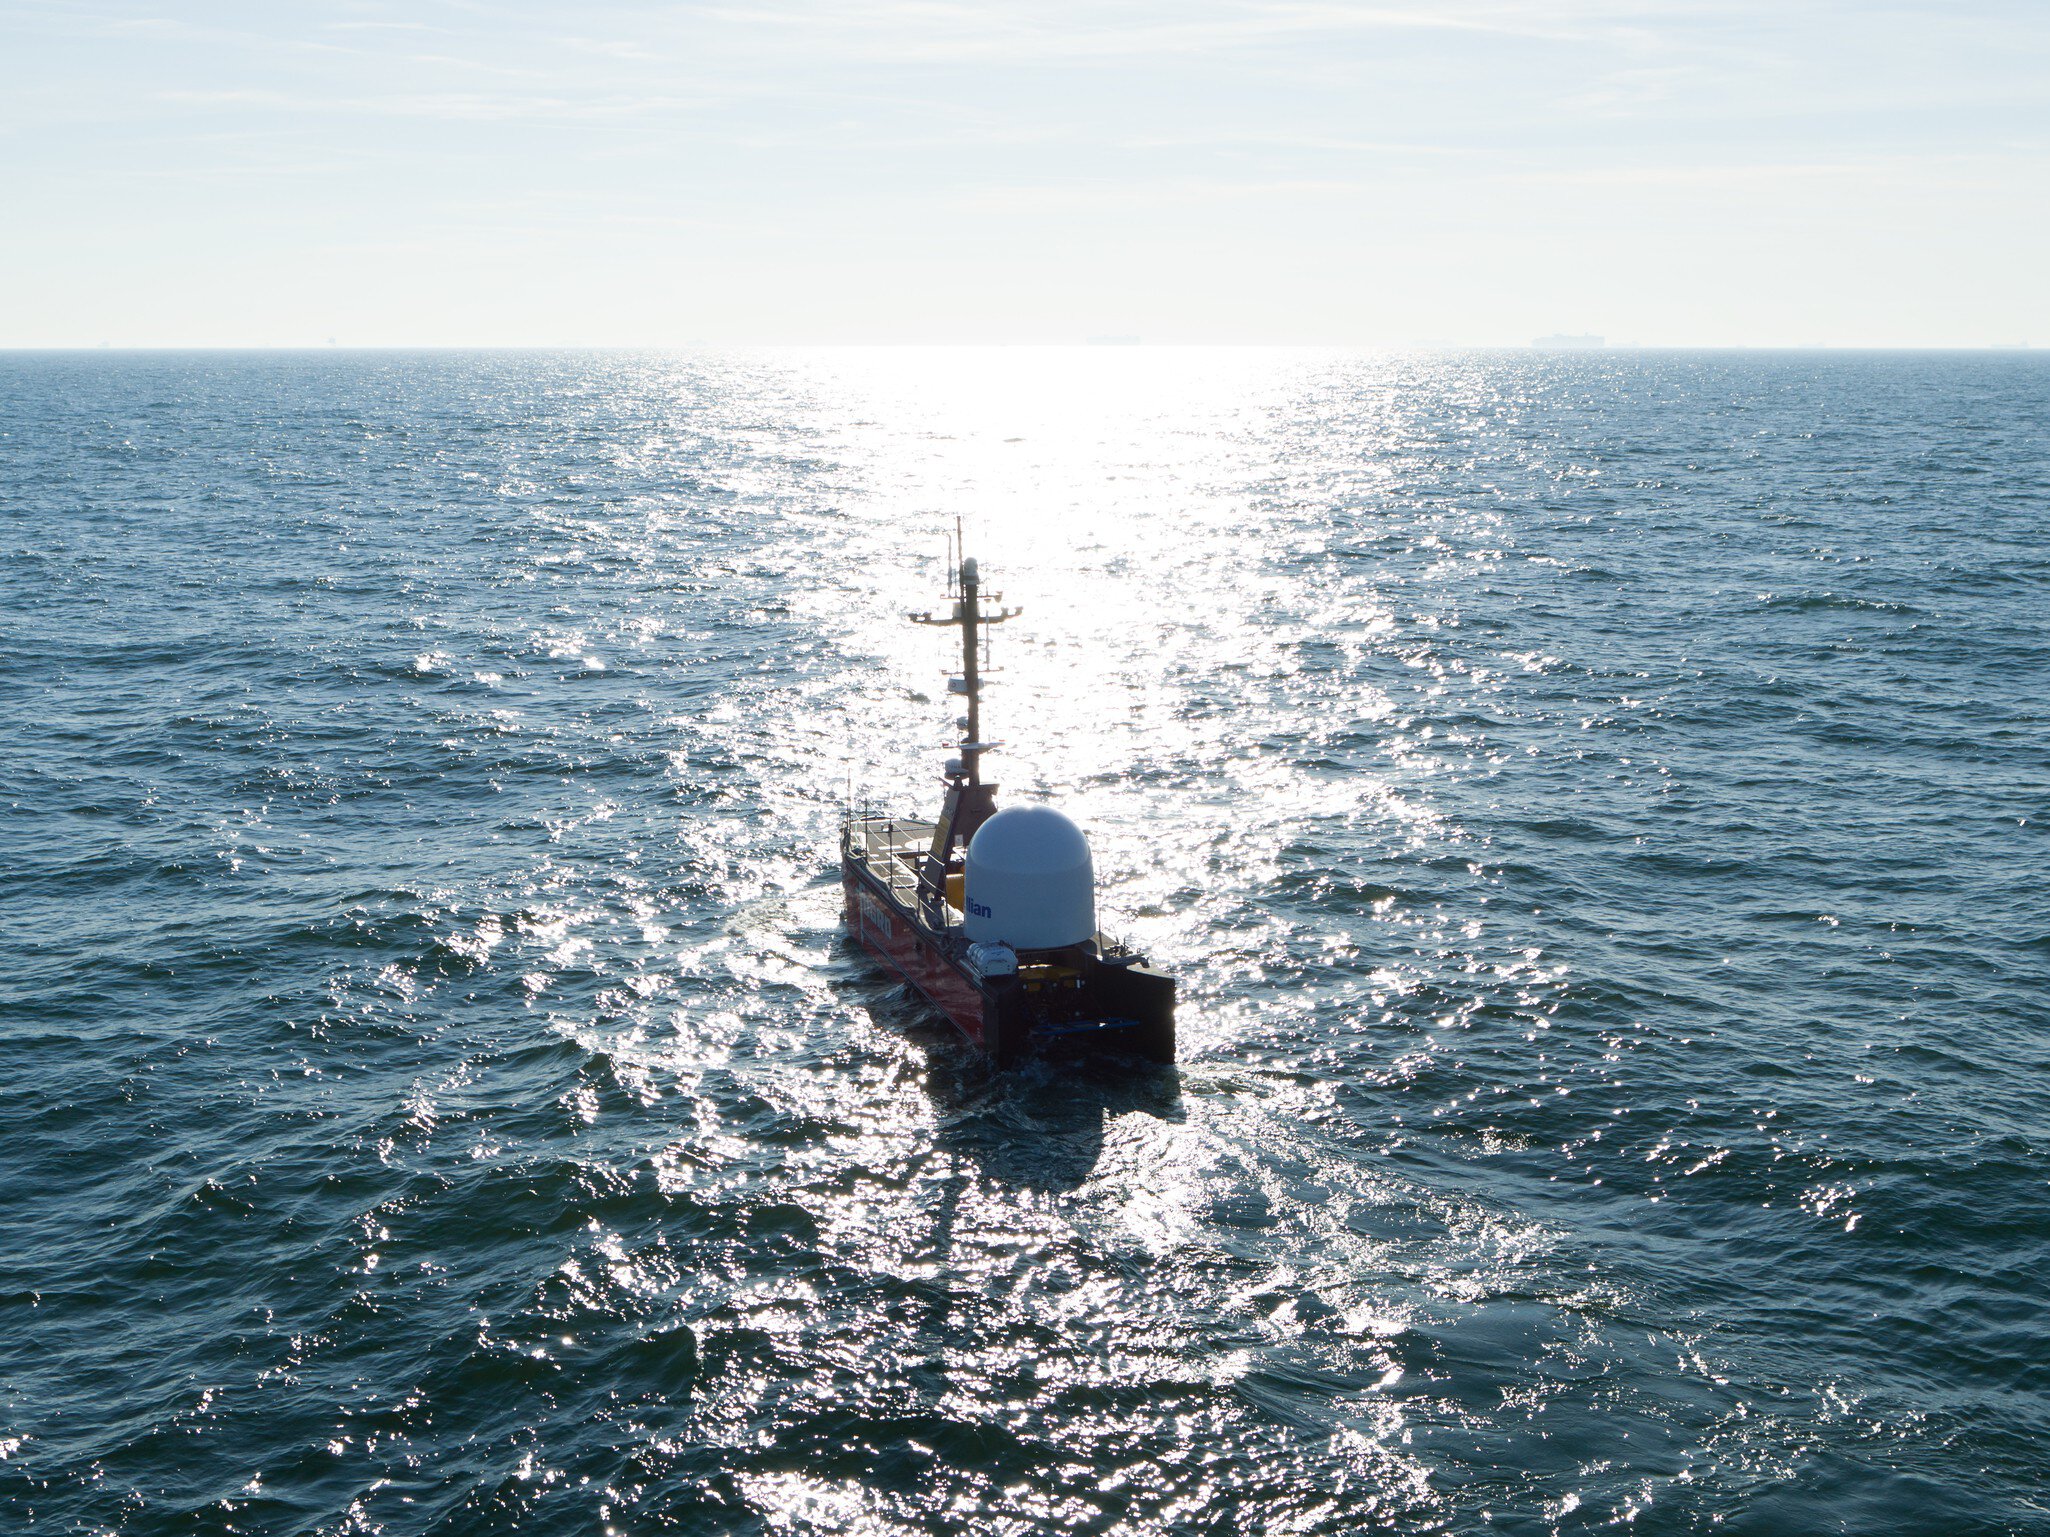 Fugro Orca - P15 - North Sea
Fugro Blue Essence USV in the North Sea